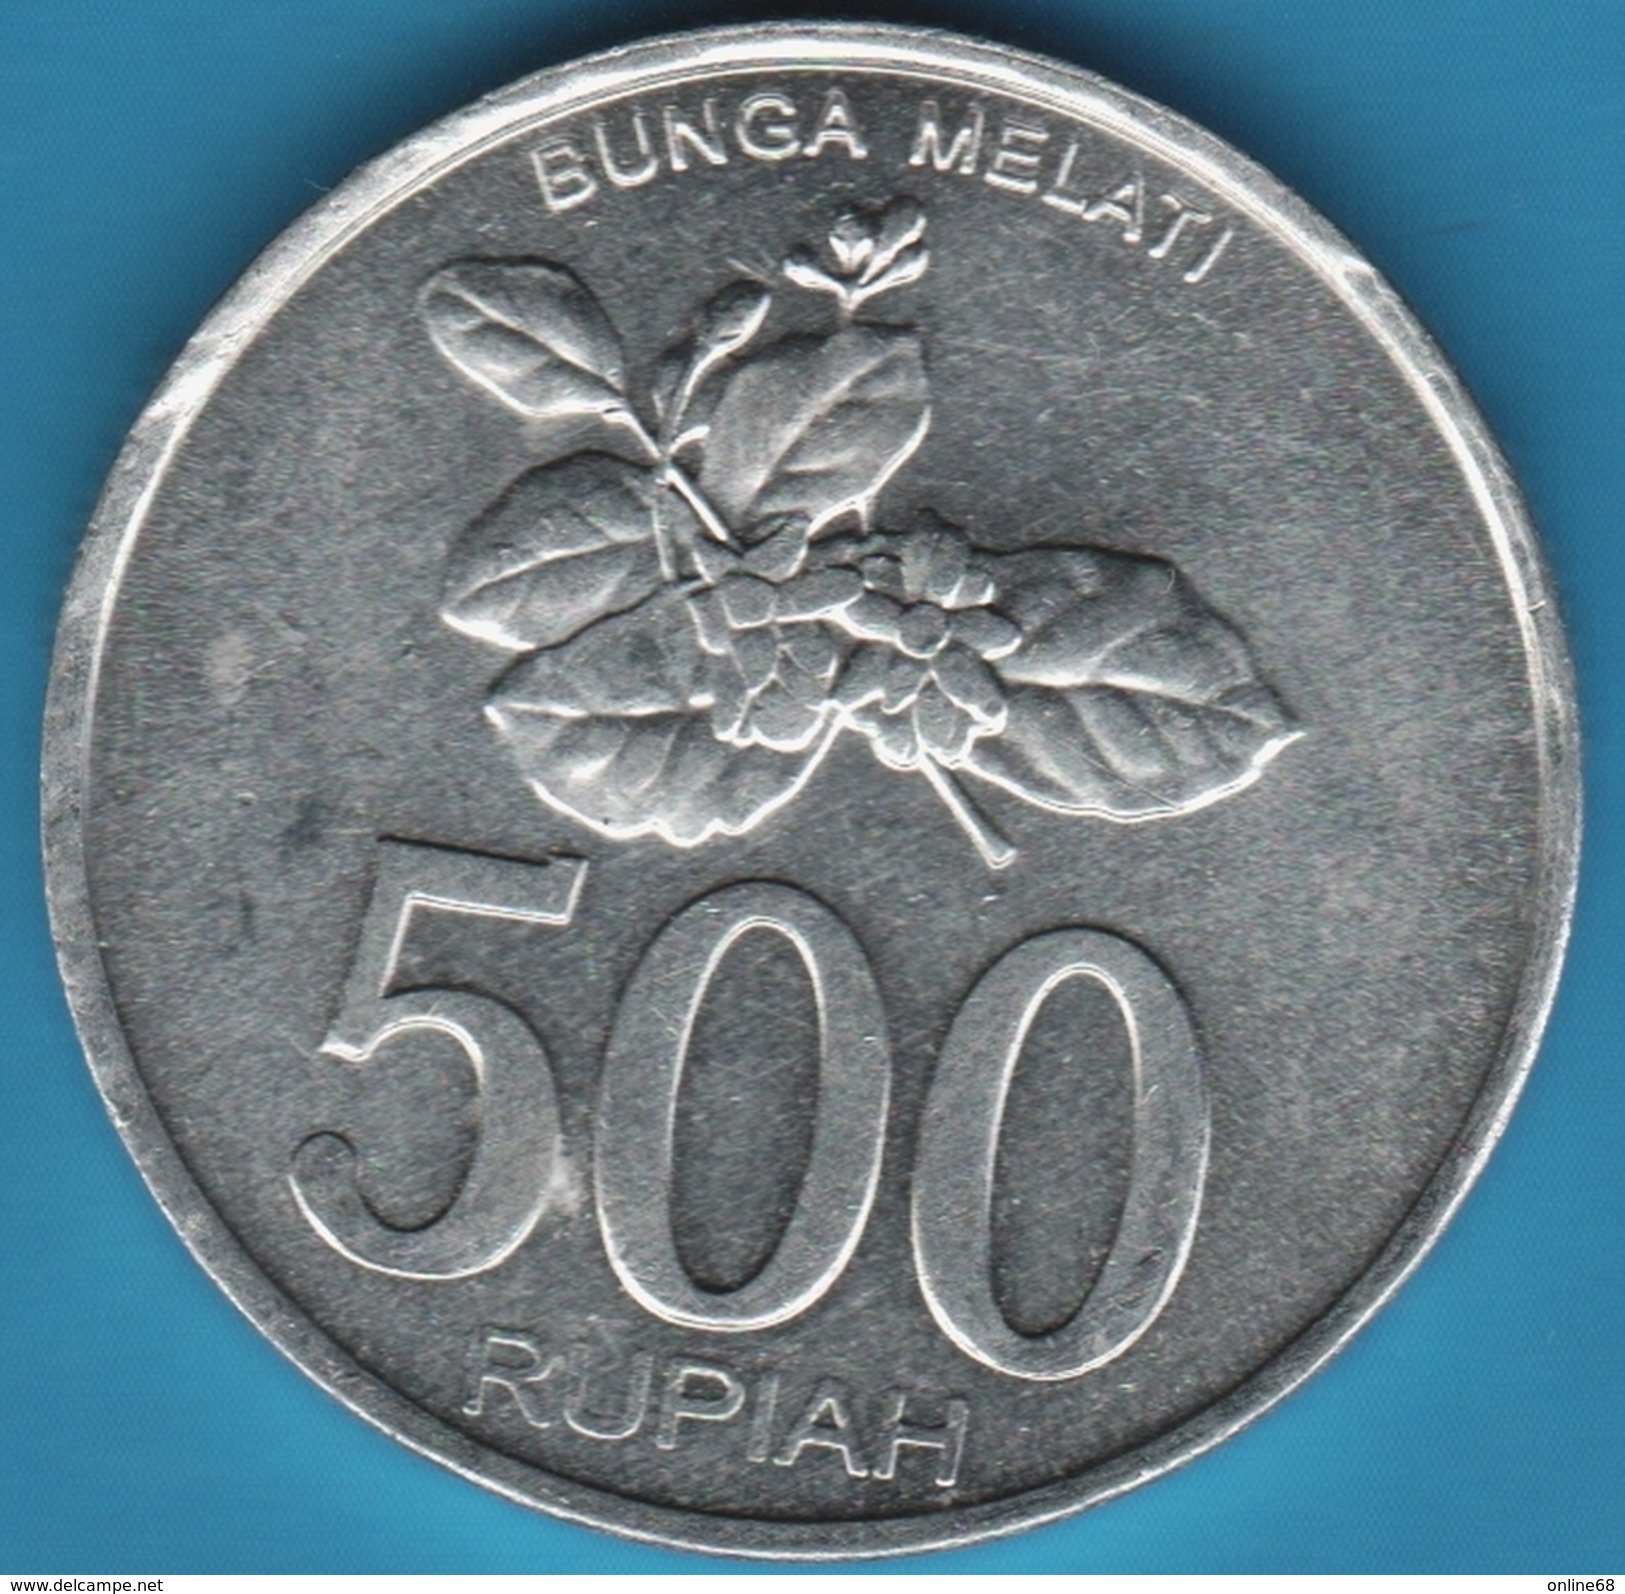 INDONESIA 500 RUPIAH 2003 BUNGA MELATI KM# 67 - Indonésie